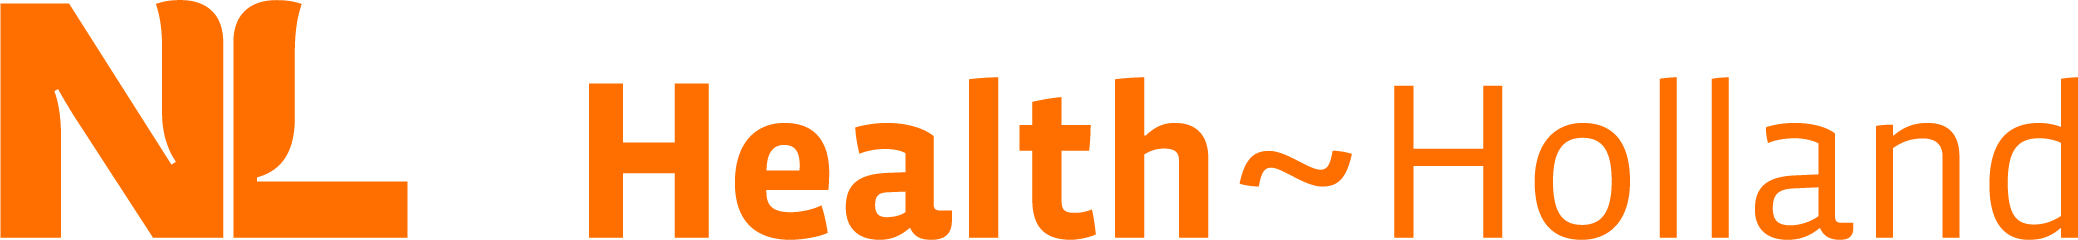 Health~Holland logo